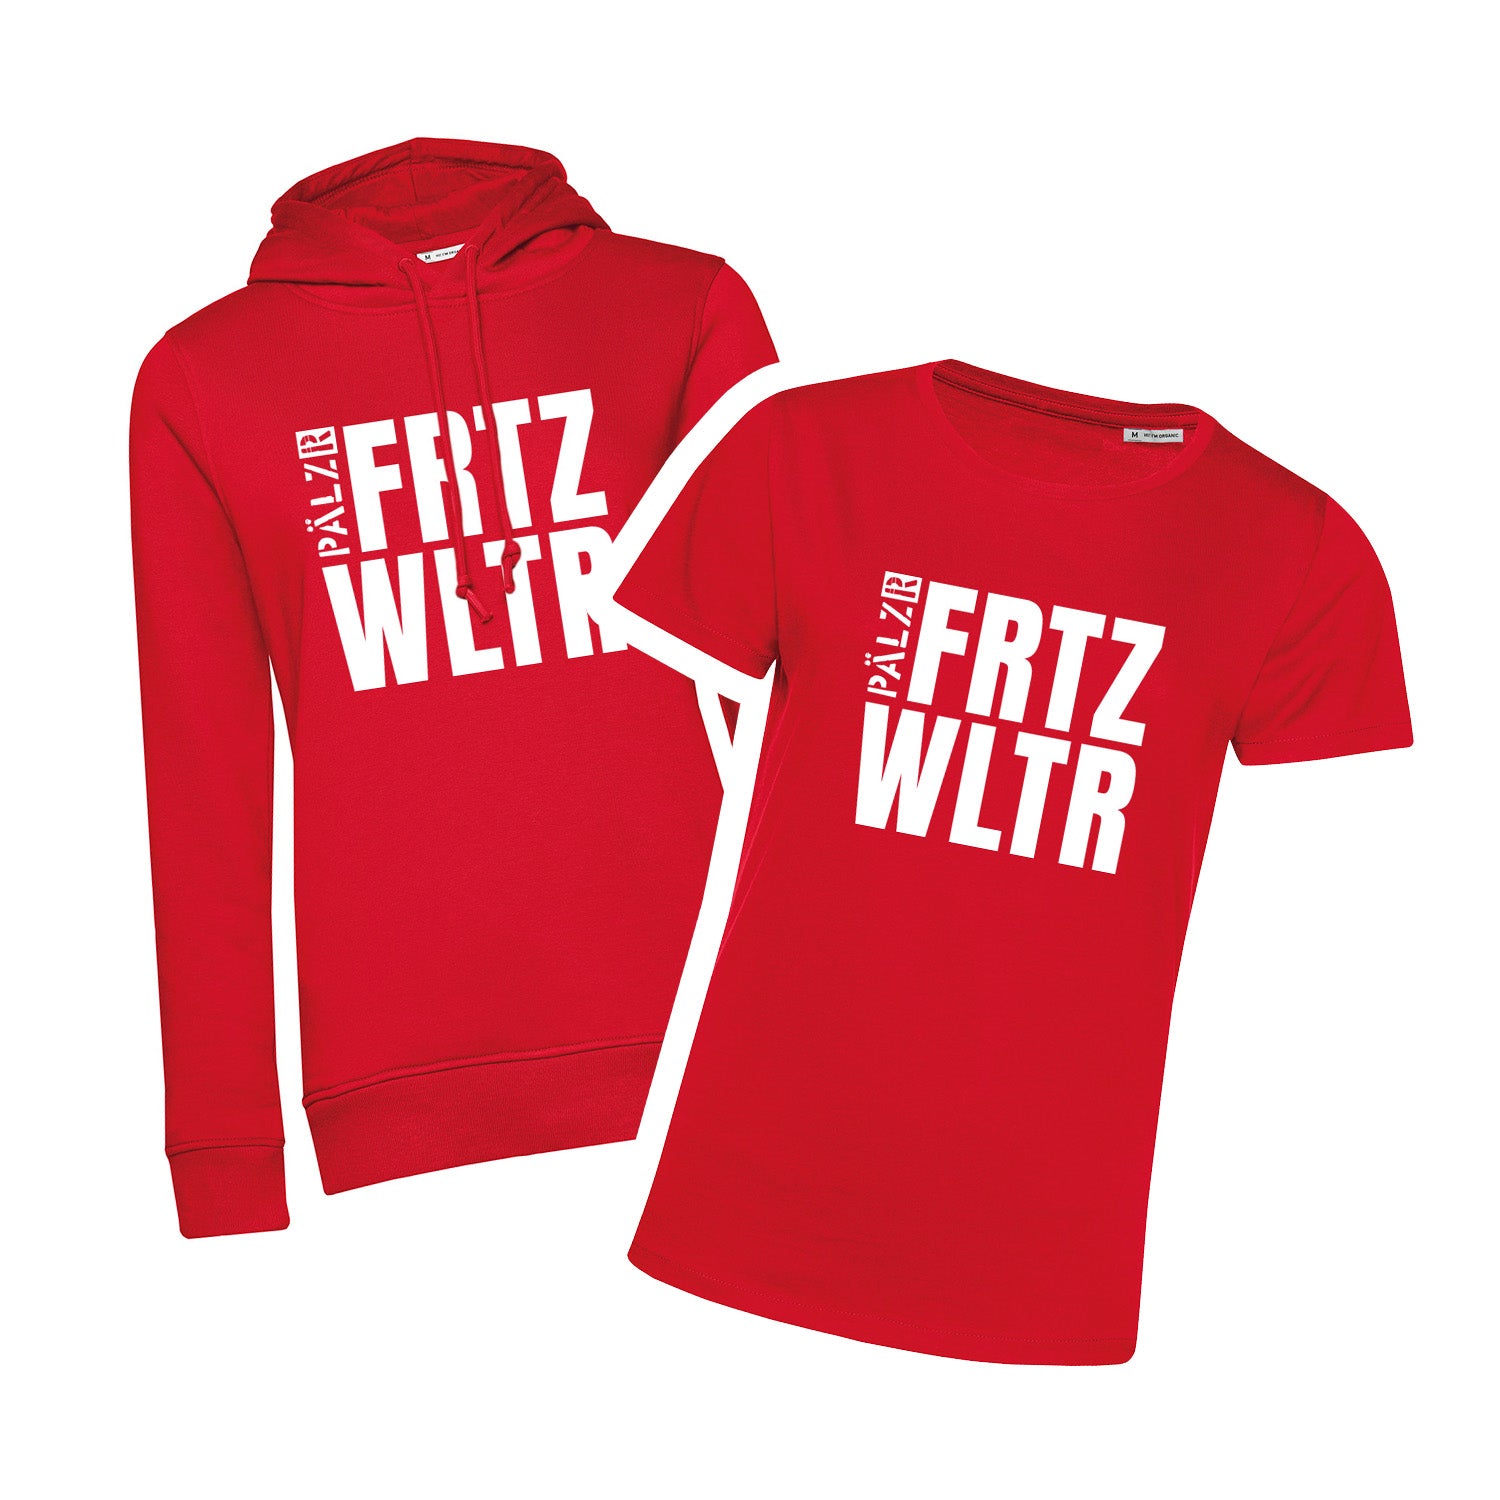 FRTZ WLTR Ole-Rot-Weiss Frauen Paket